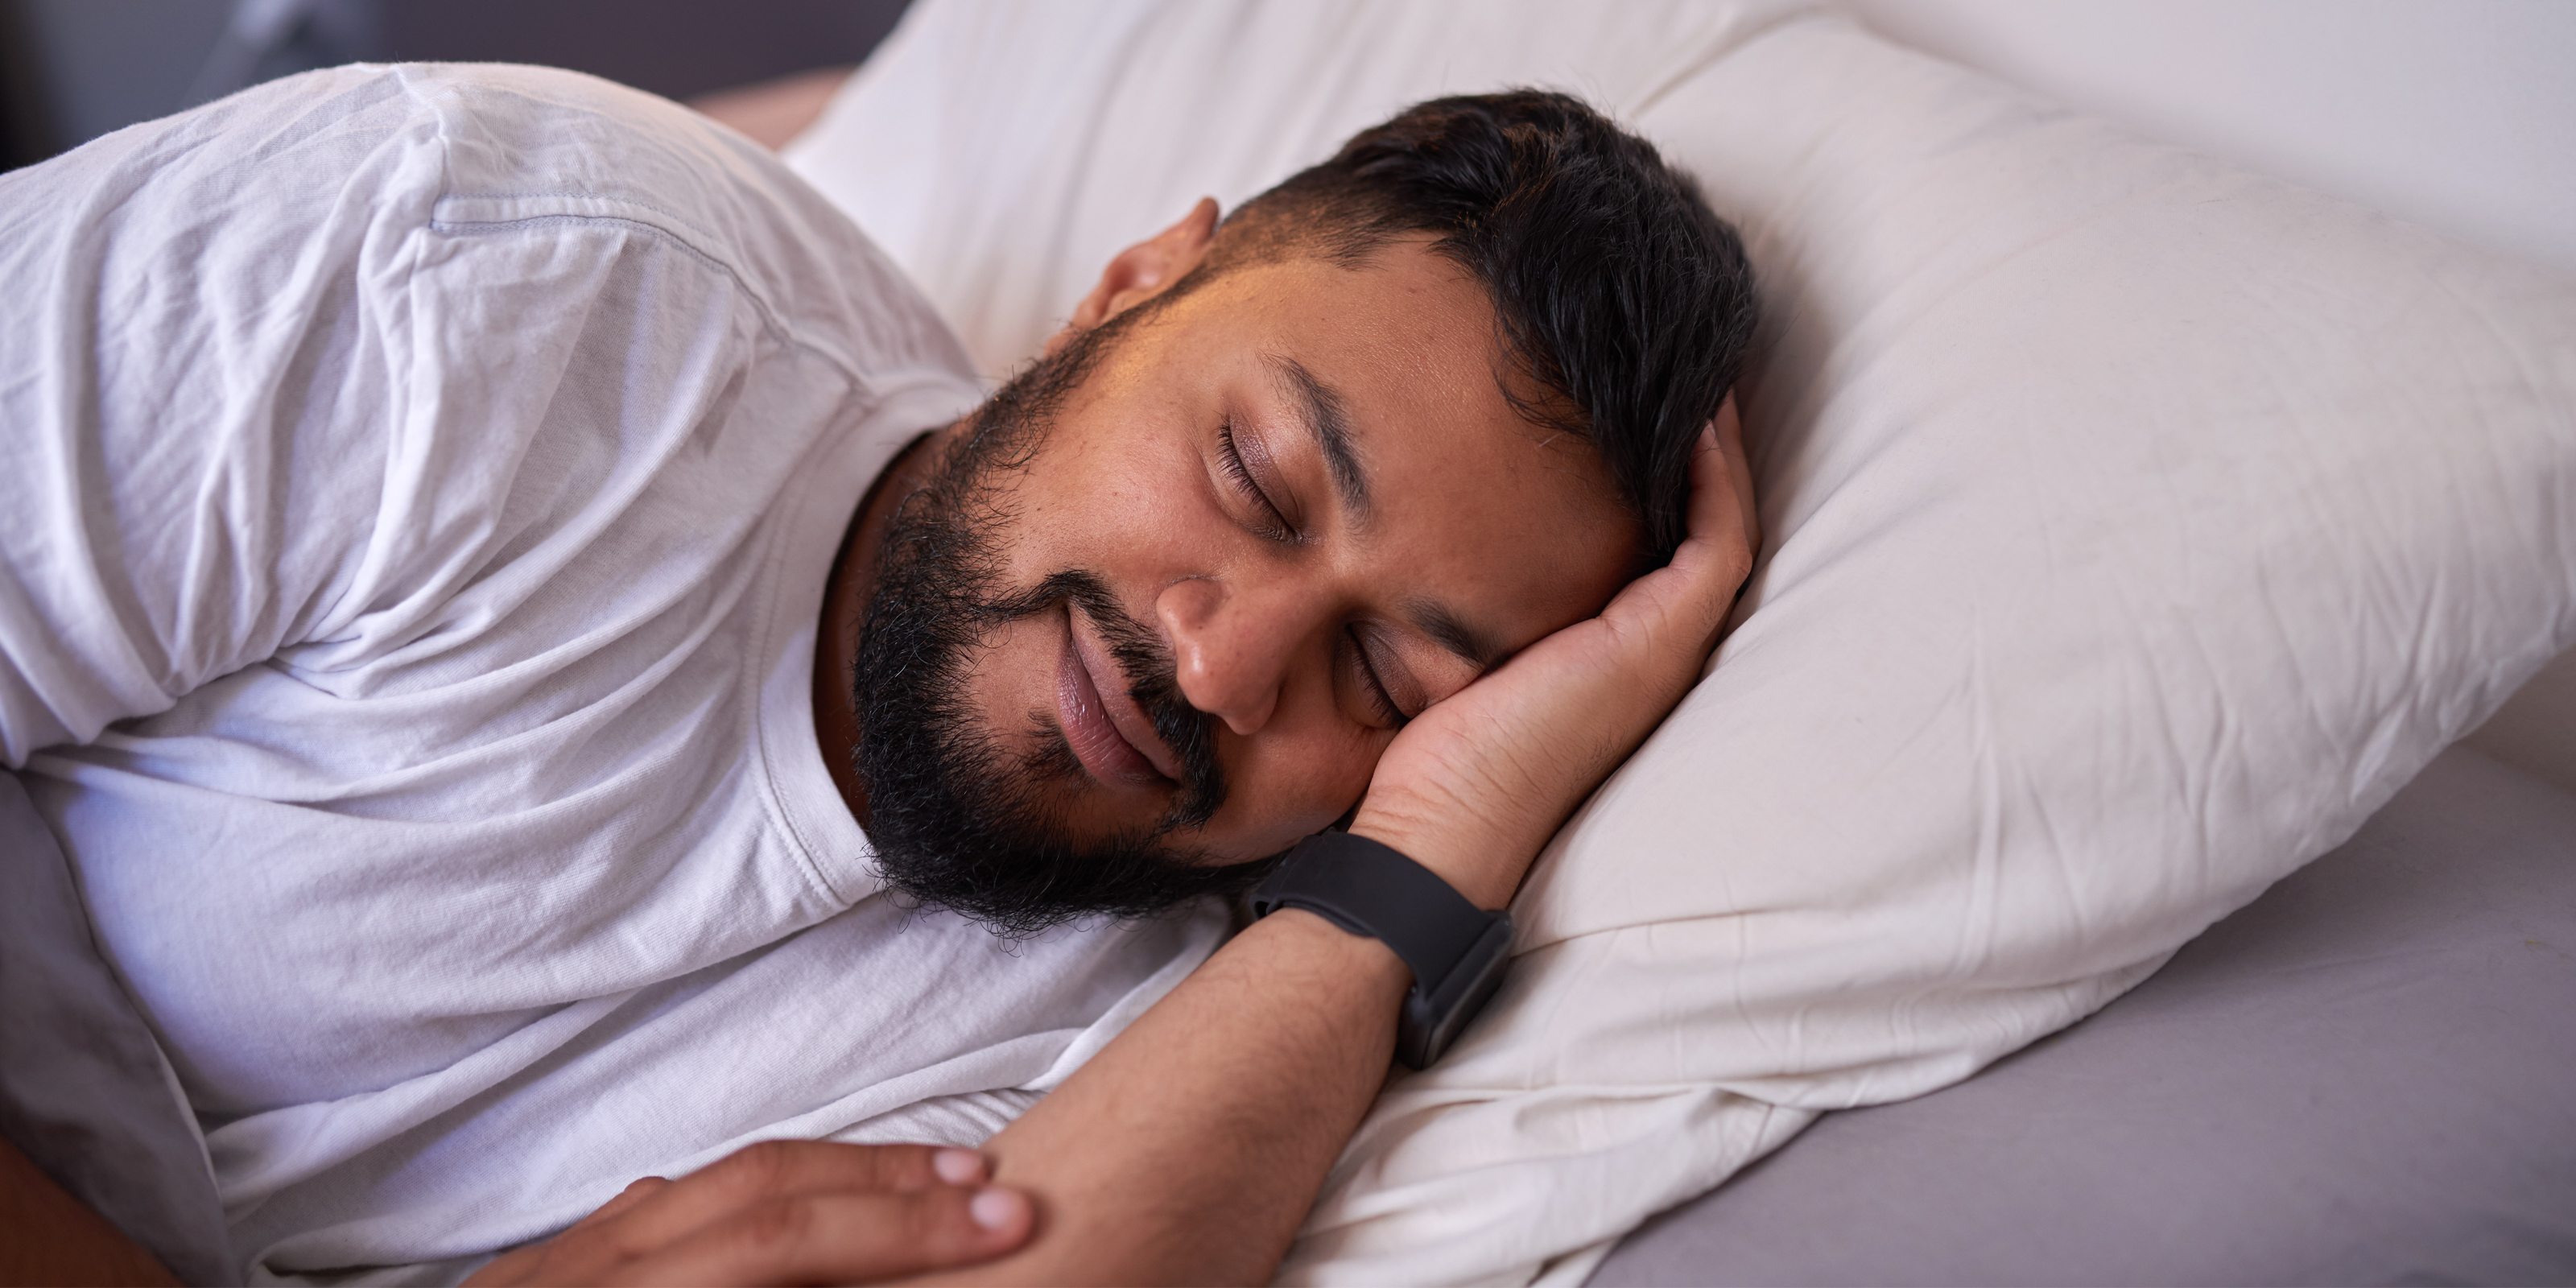 Image of a man sleeping while using a fitness/sleep tracker